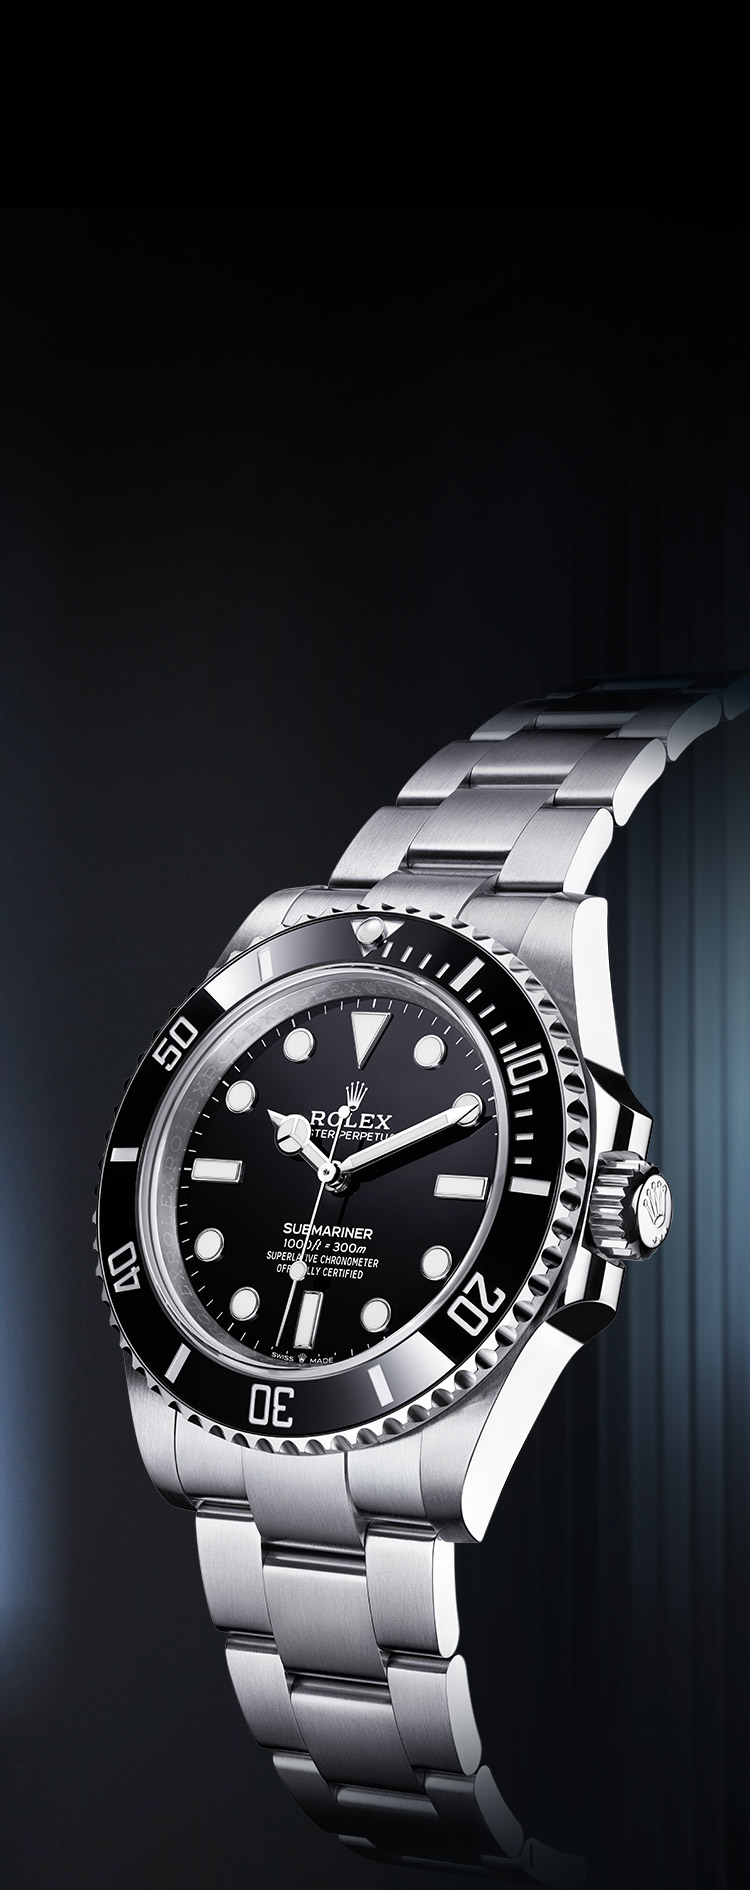 Часы Submariner компании Rolex – Эталон 